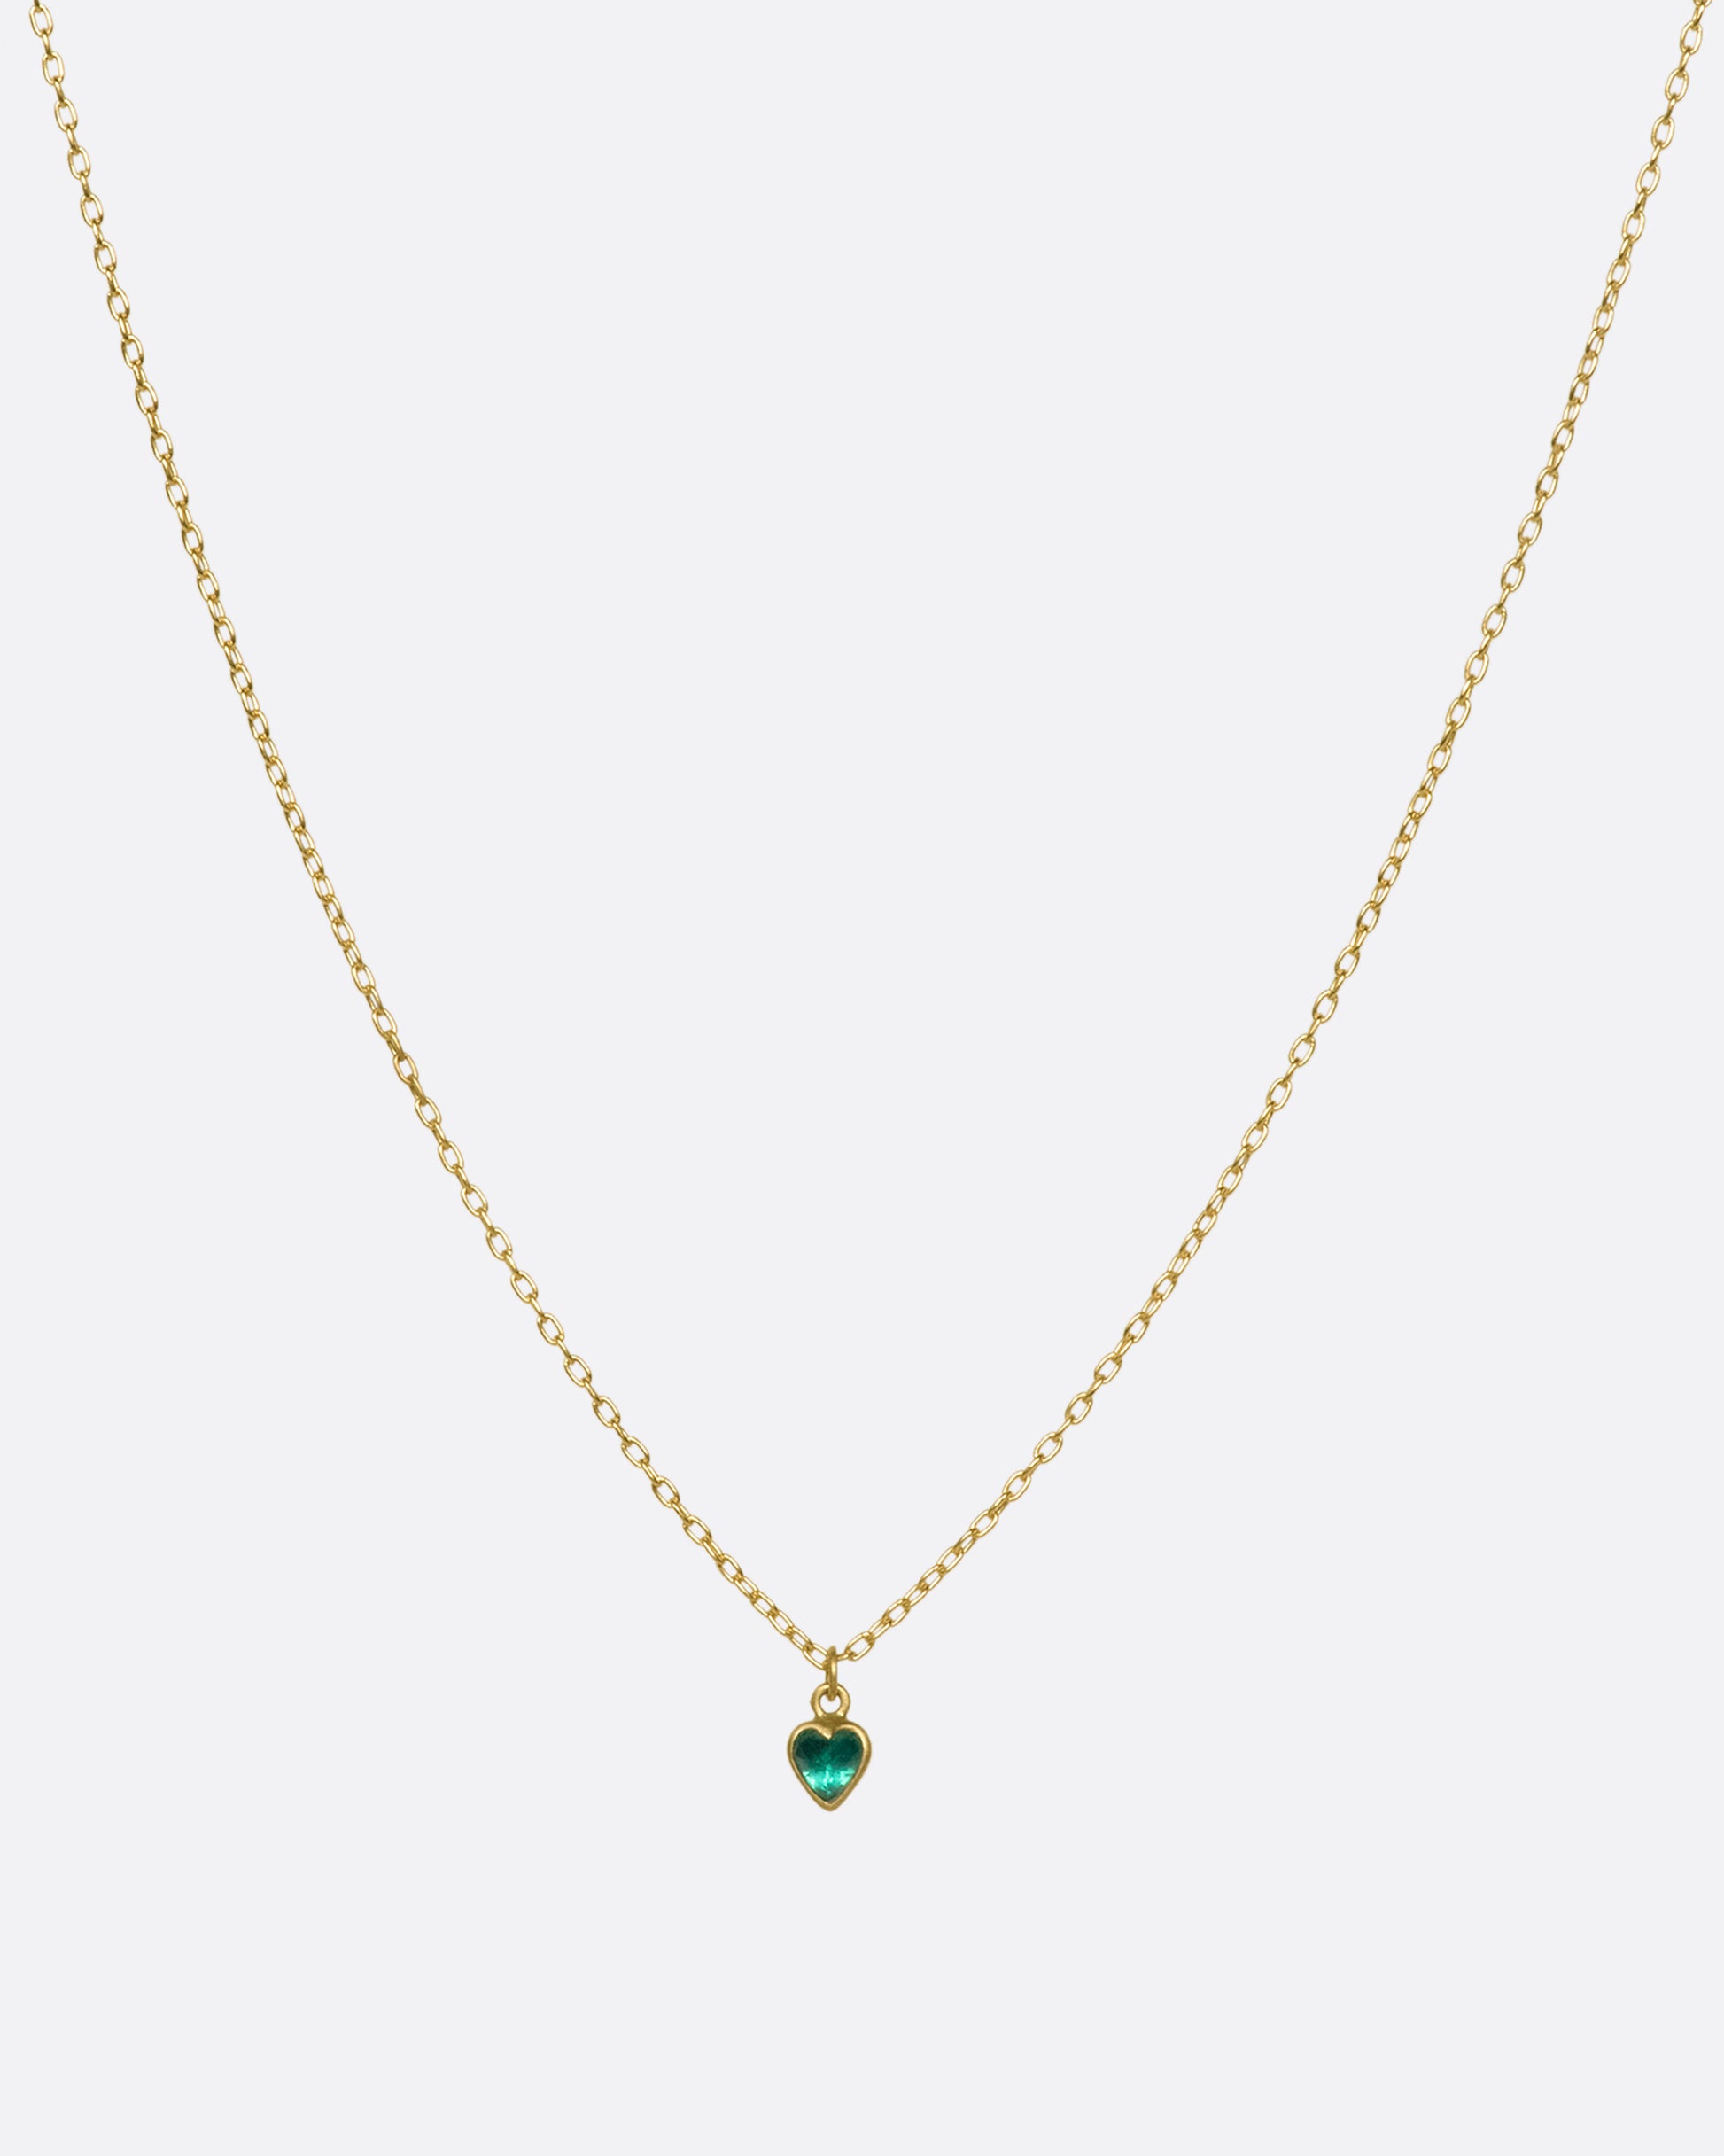 A bezel set emerald heart pendant hanging on a gold chain.